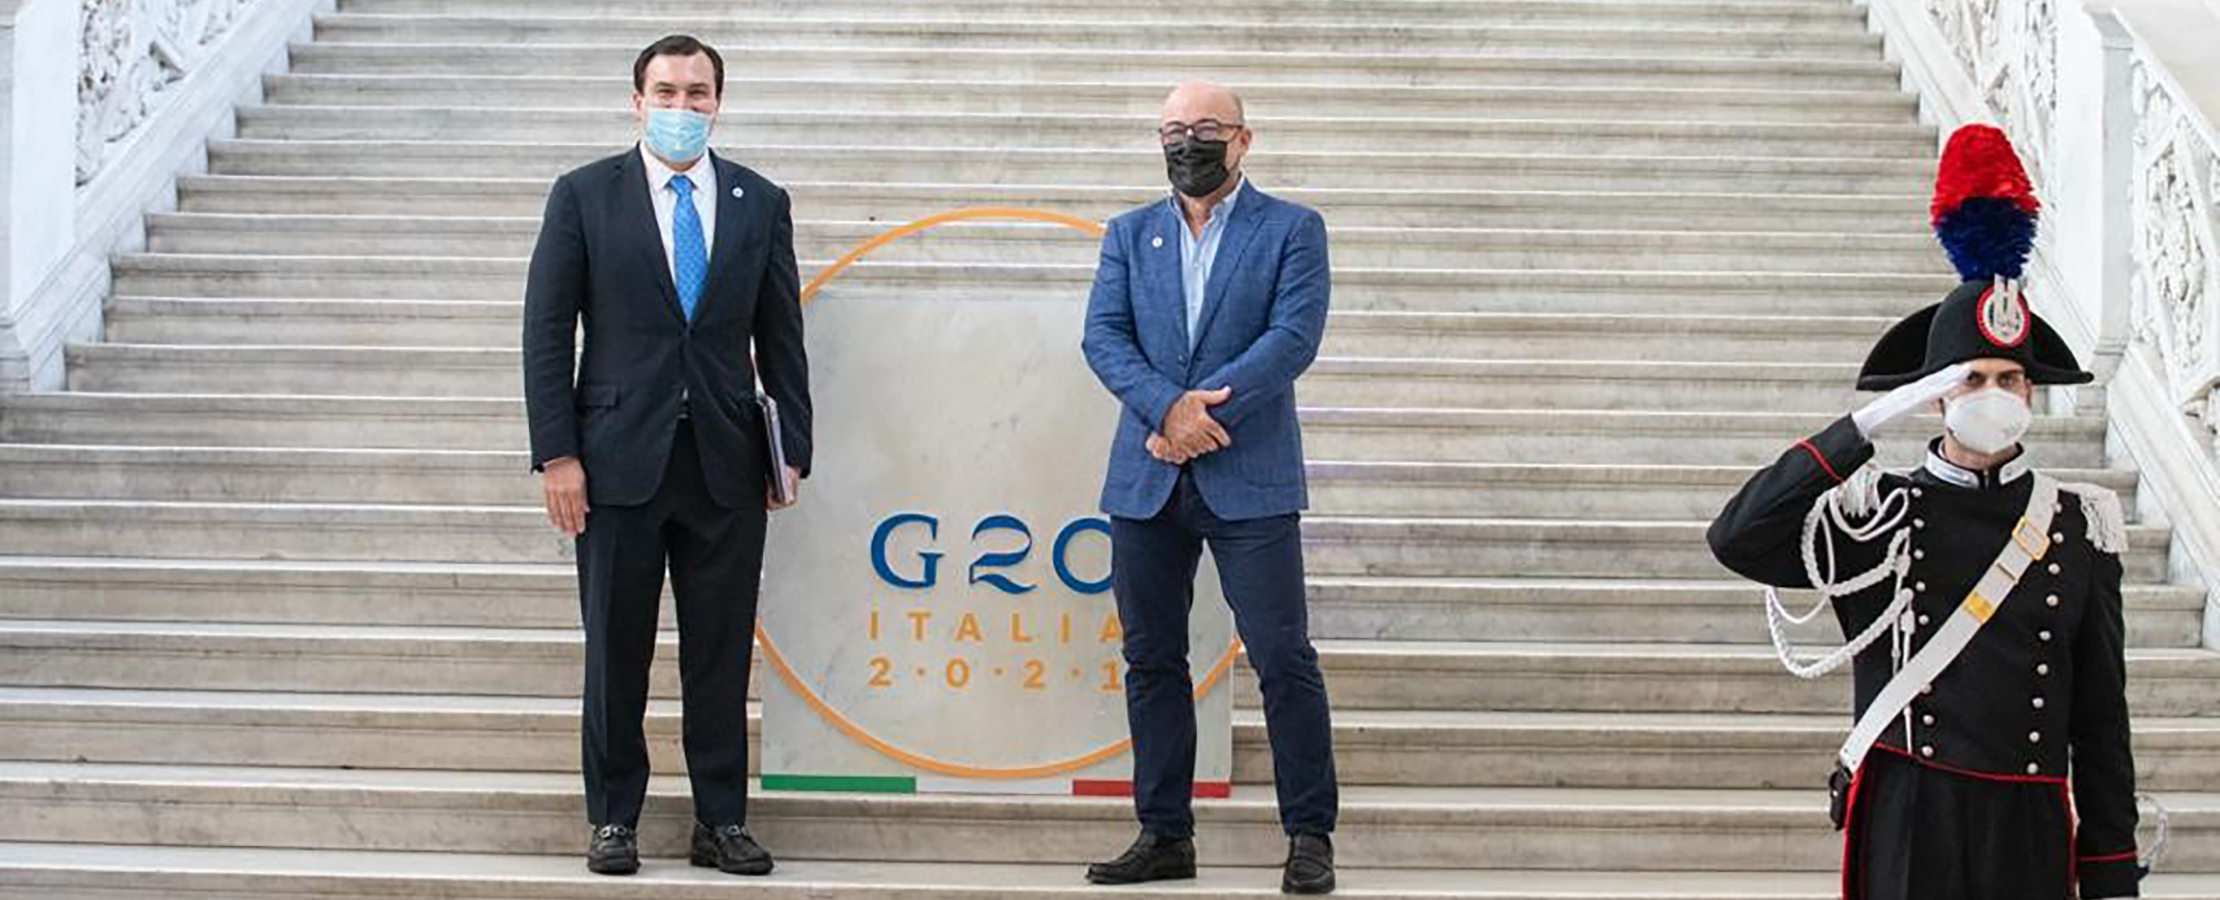 G20 Pr Banner